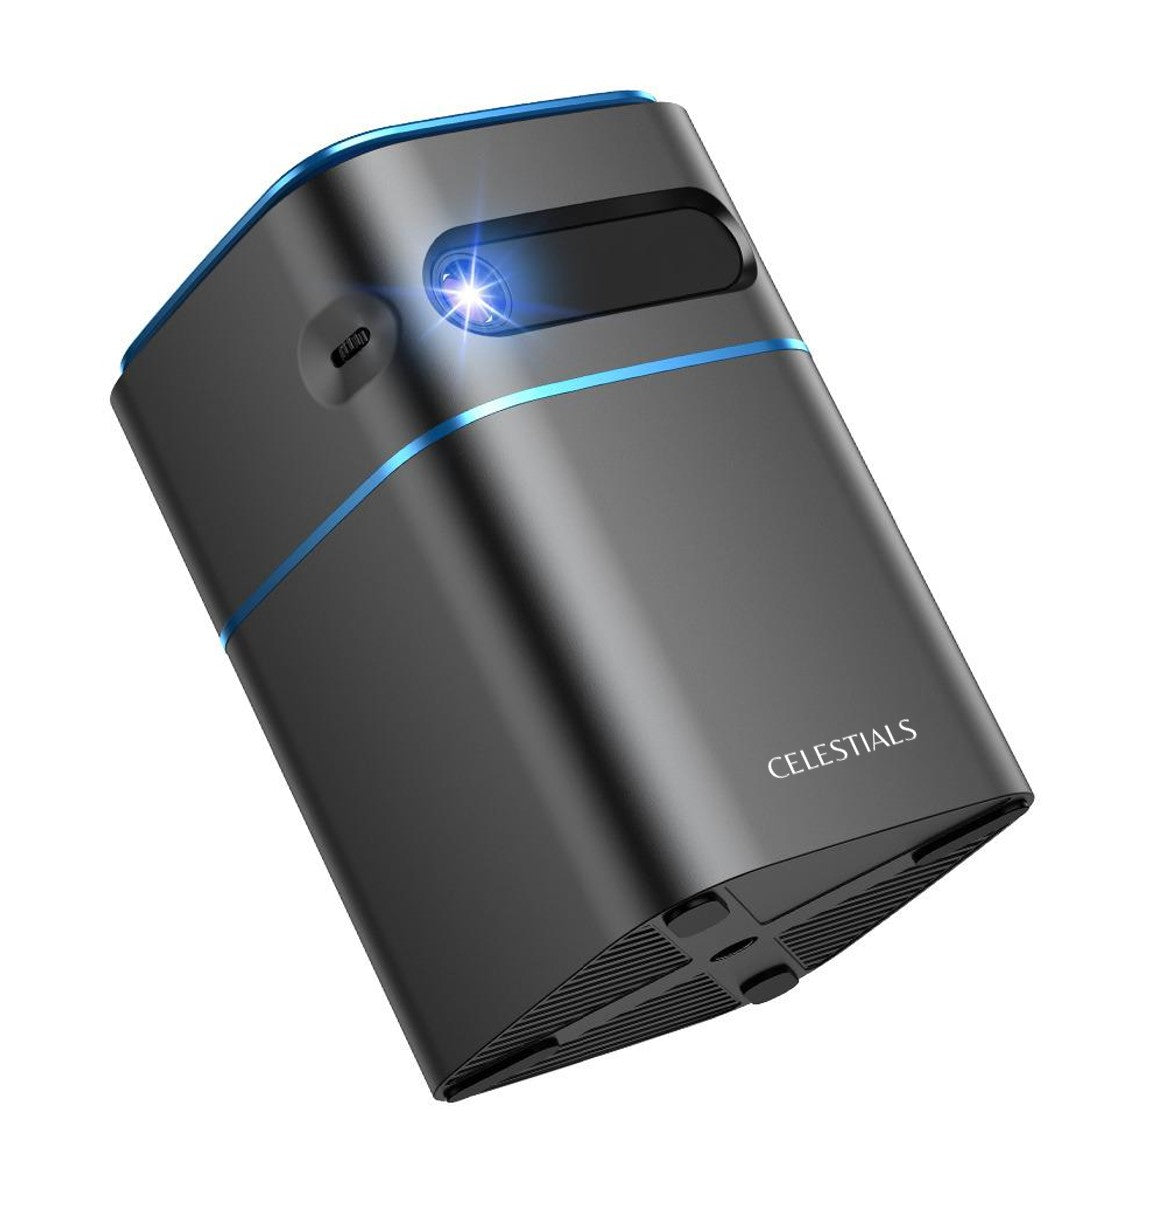 CELESTIALS OMNI - Smart Portable Projector